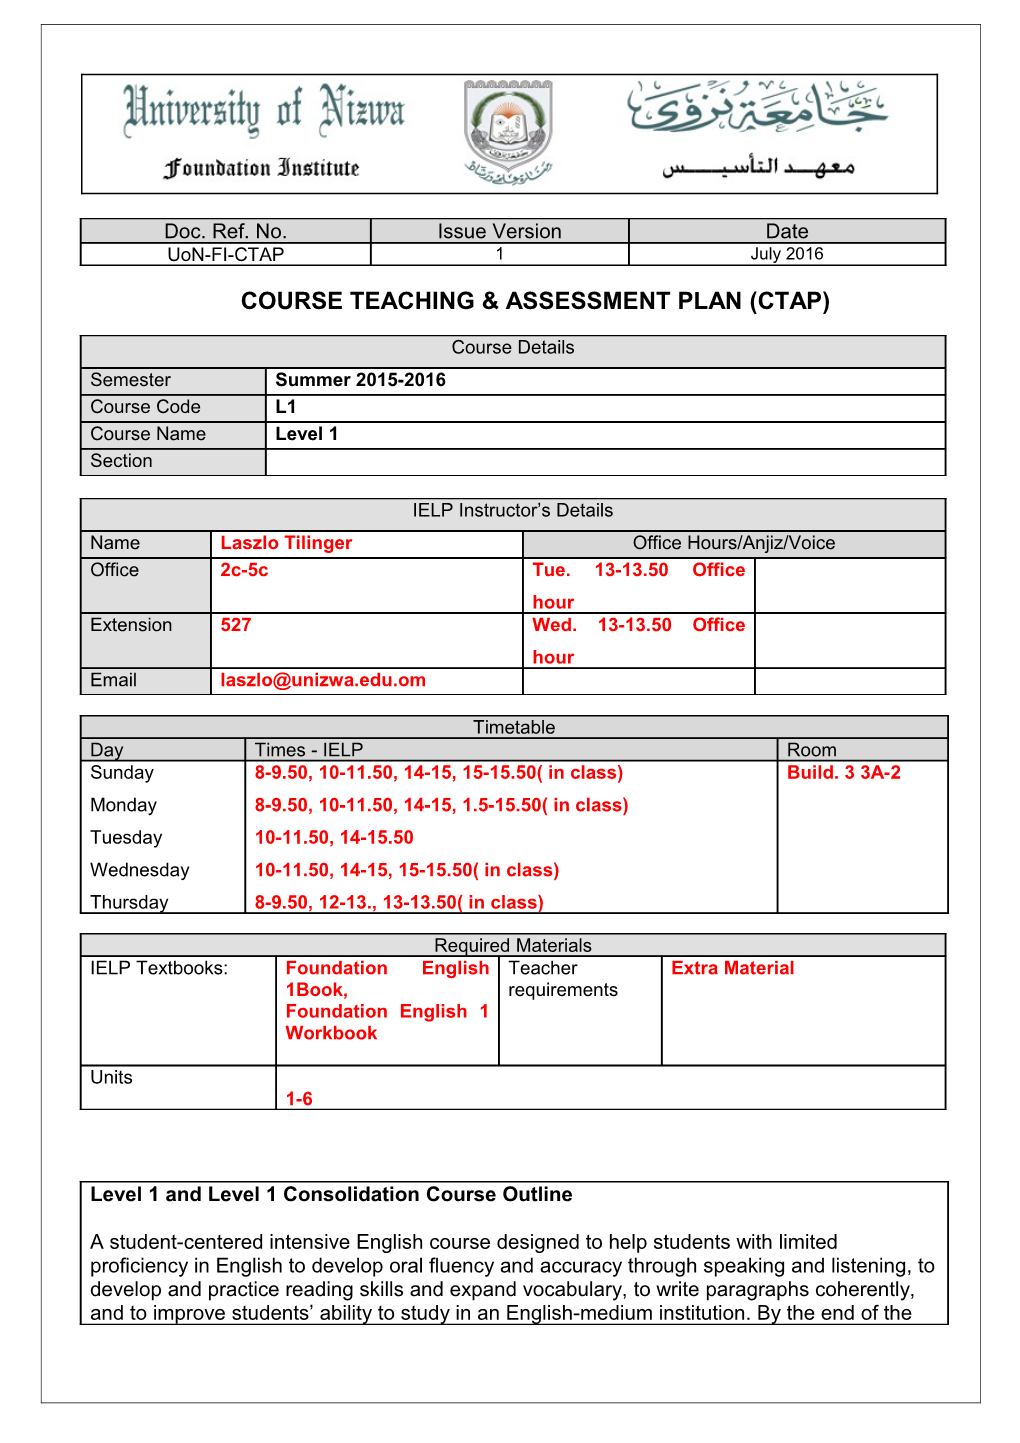 Course Teaching & Assessment Plan (Ctap)